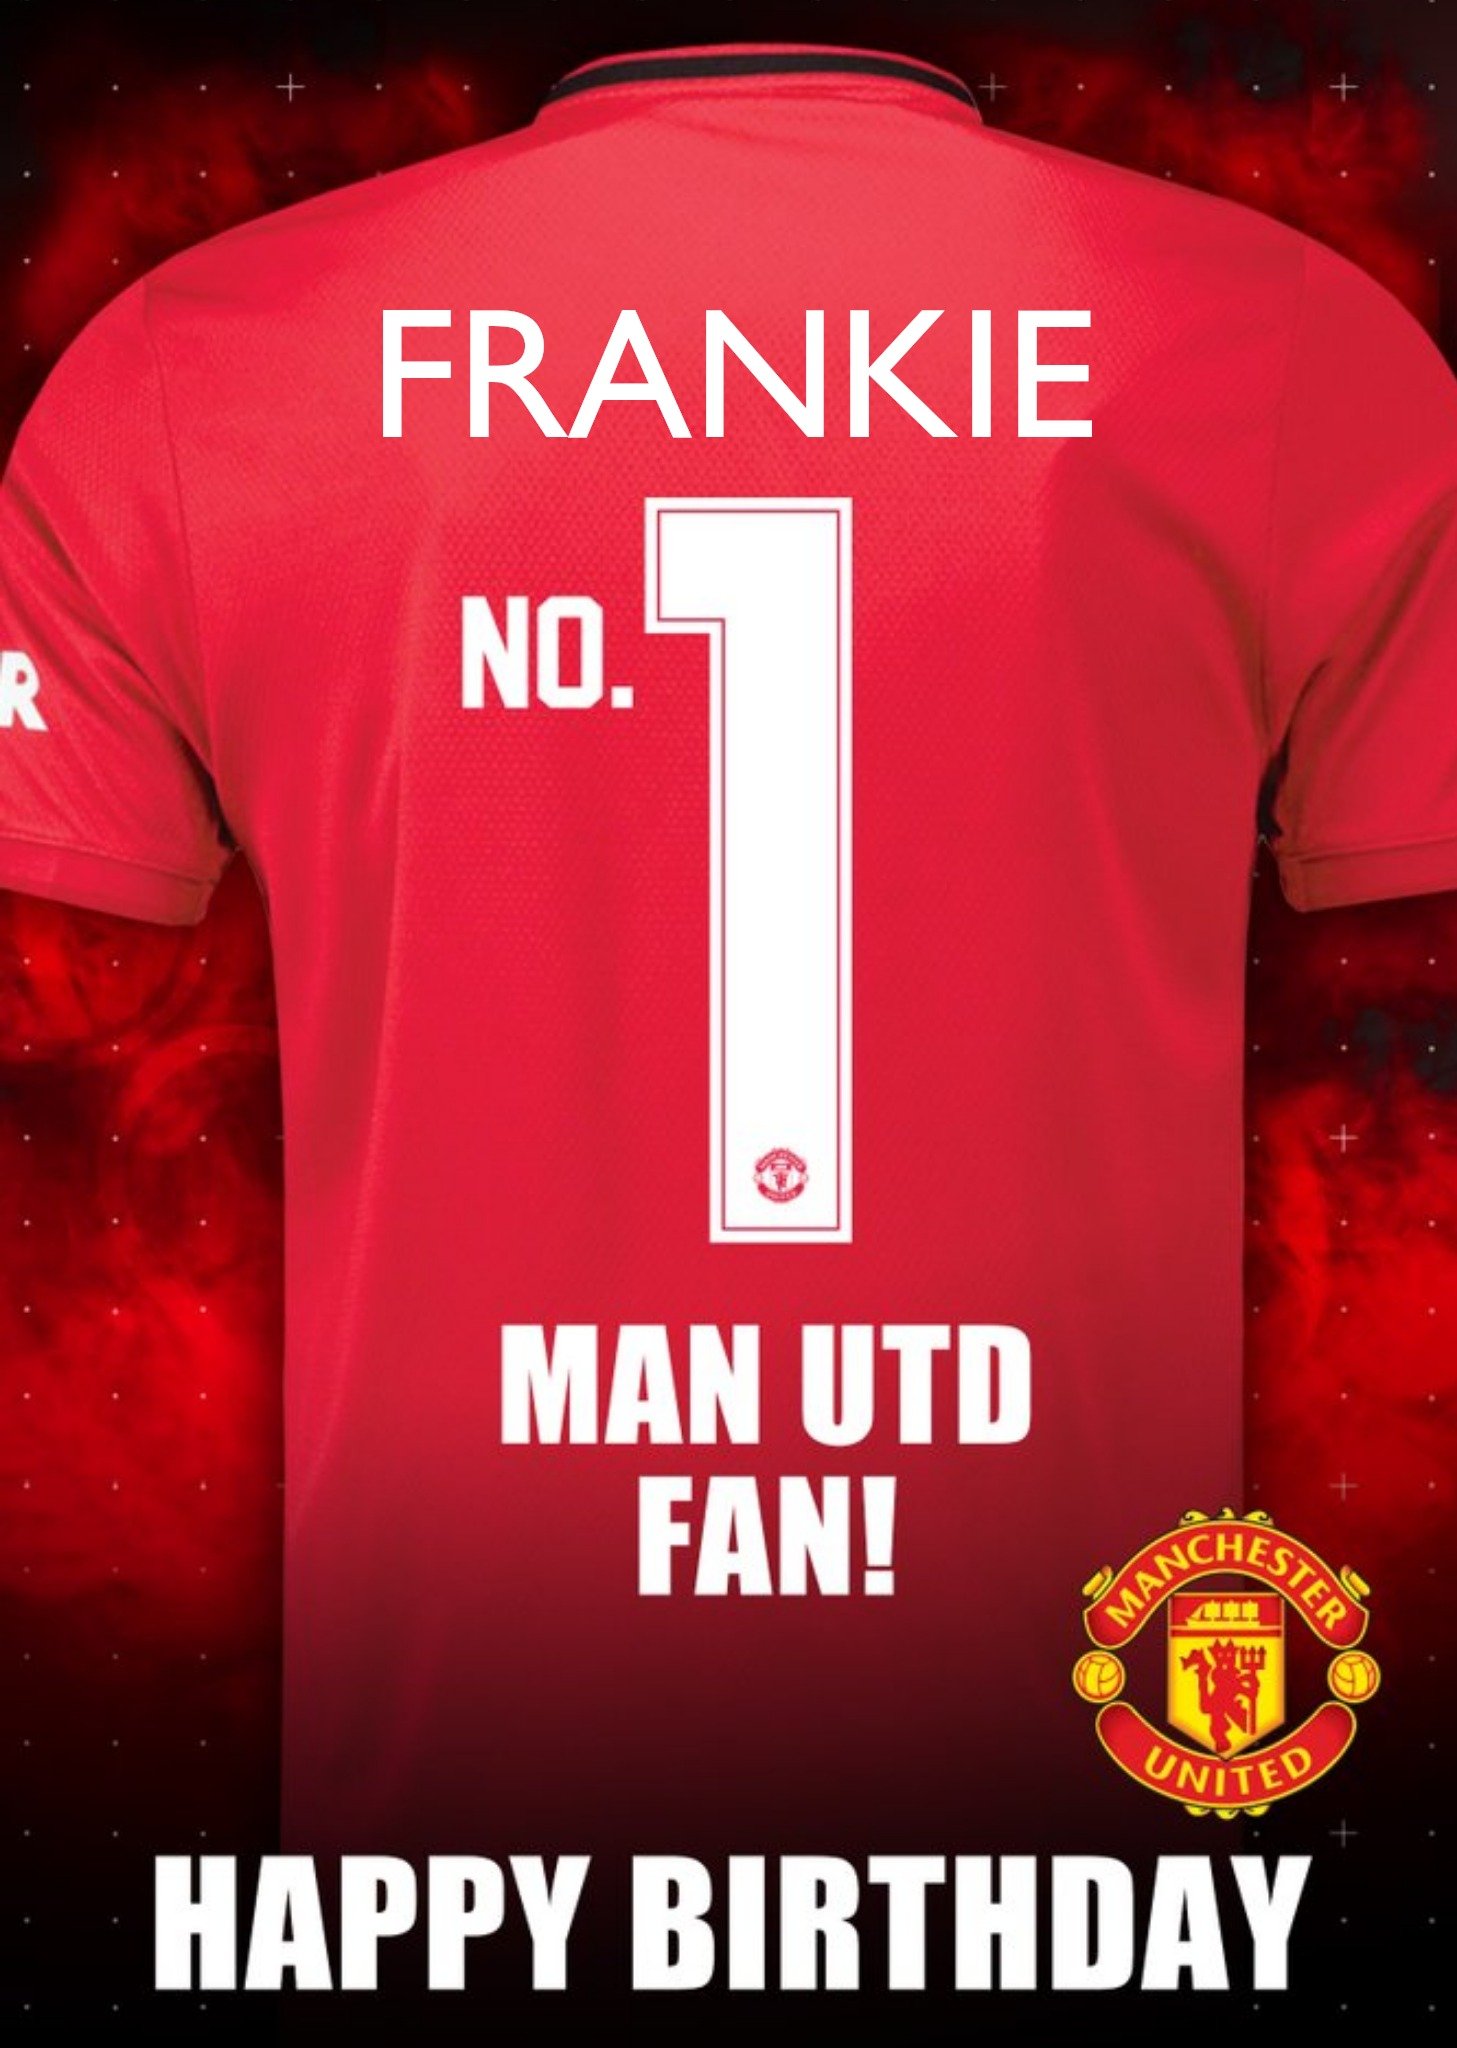 Manchester United Fc Football Club No.1 Fan Football Shirt Birthday Card, Large